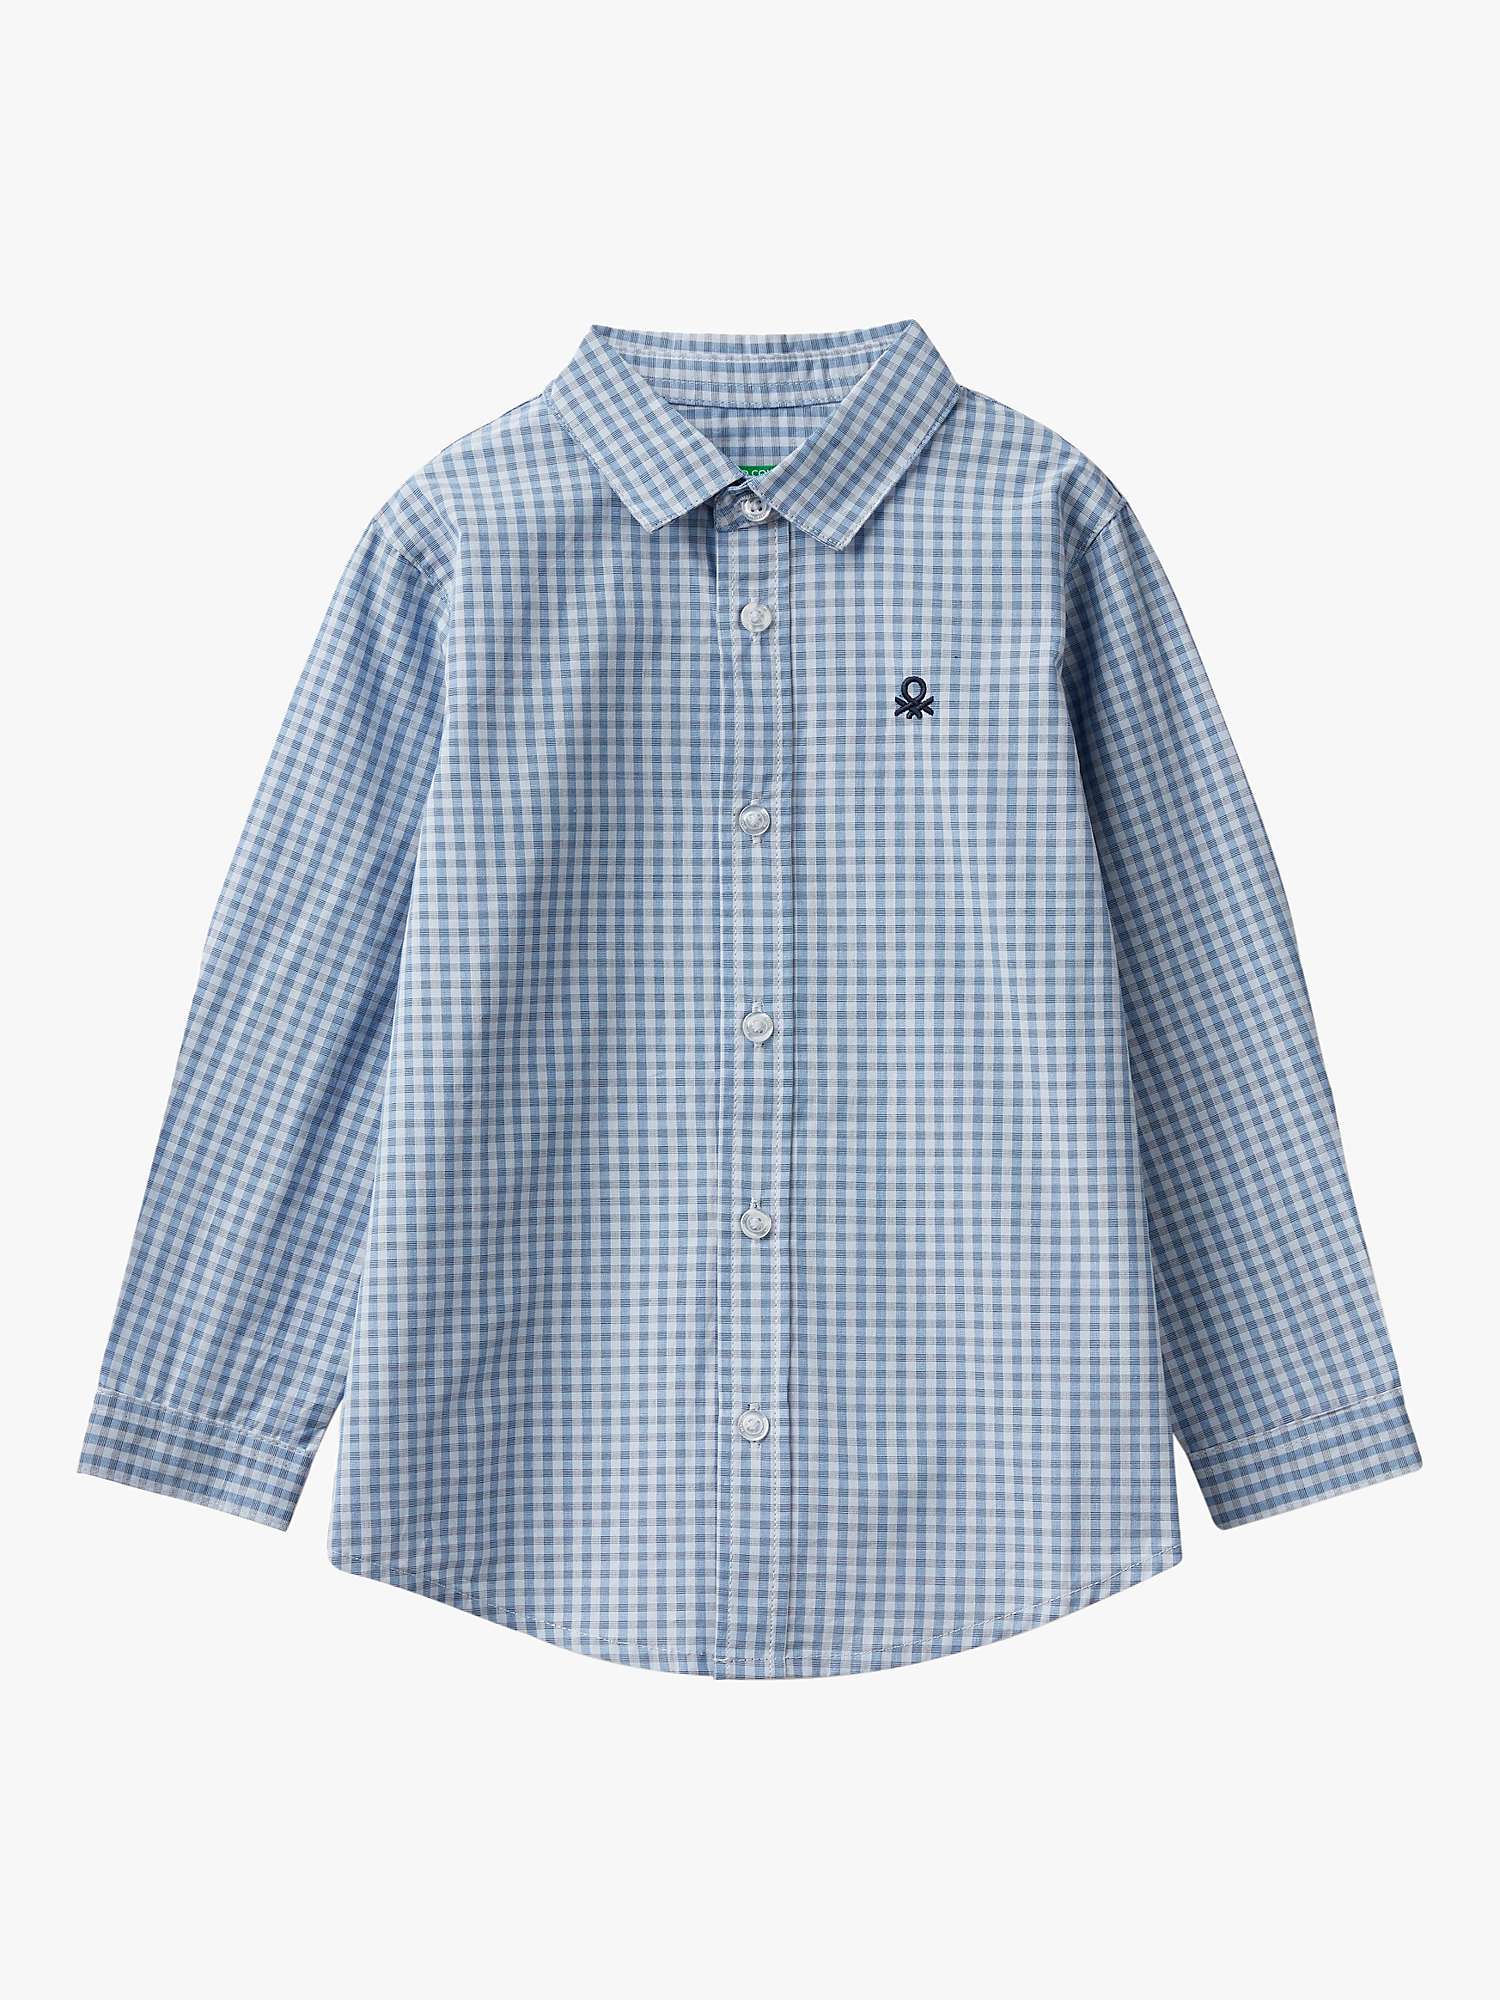 Buy Benetton Kids' Cotton Check Long Sleeve Shirt, Blue Online at johnlewis.com